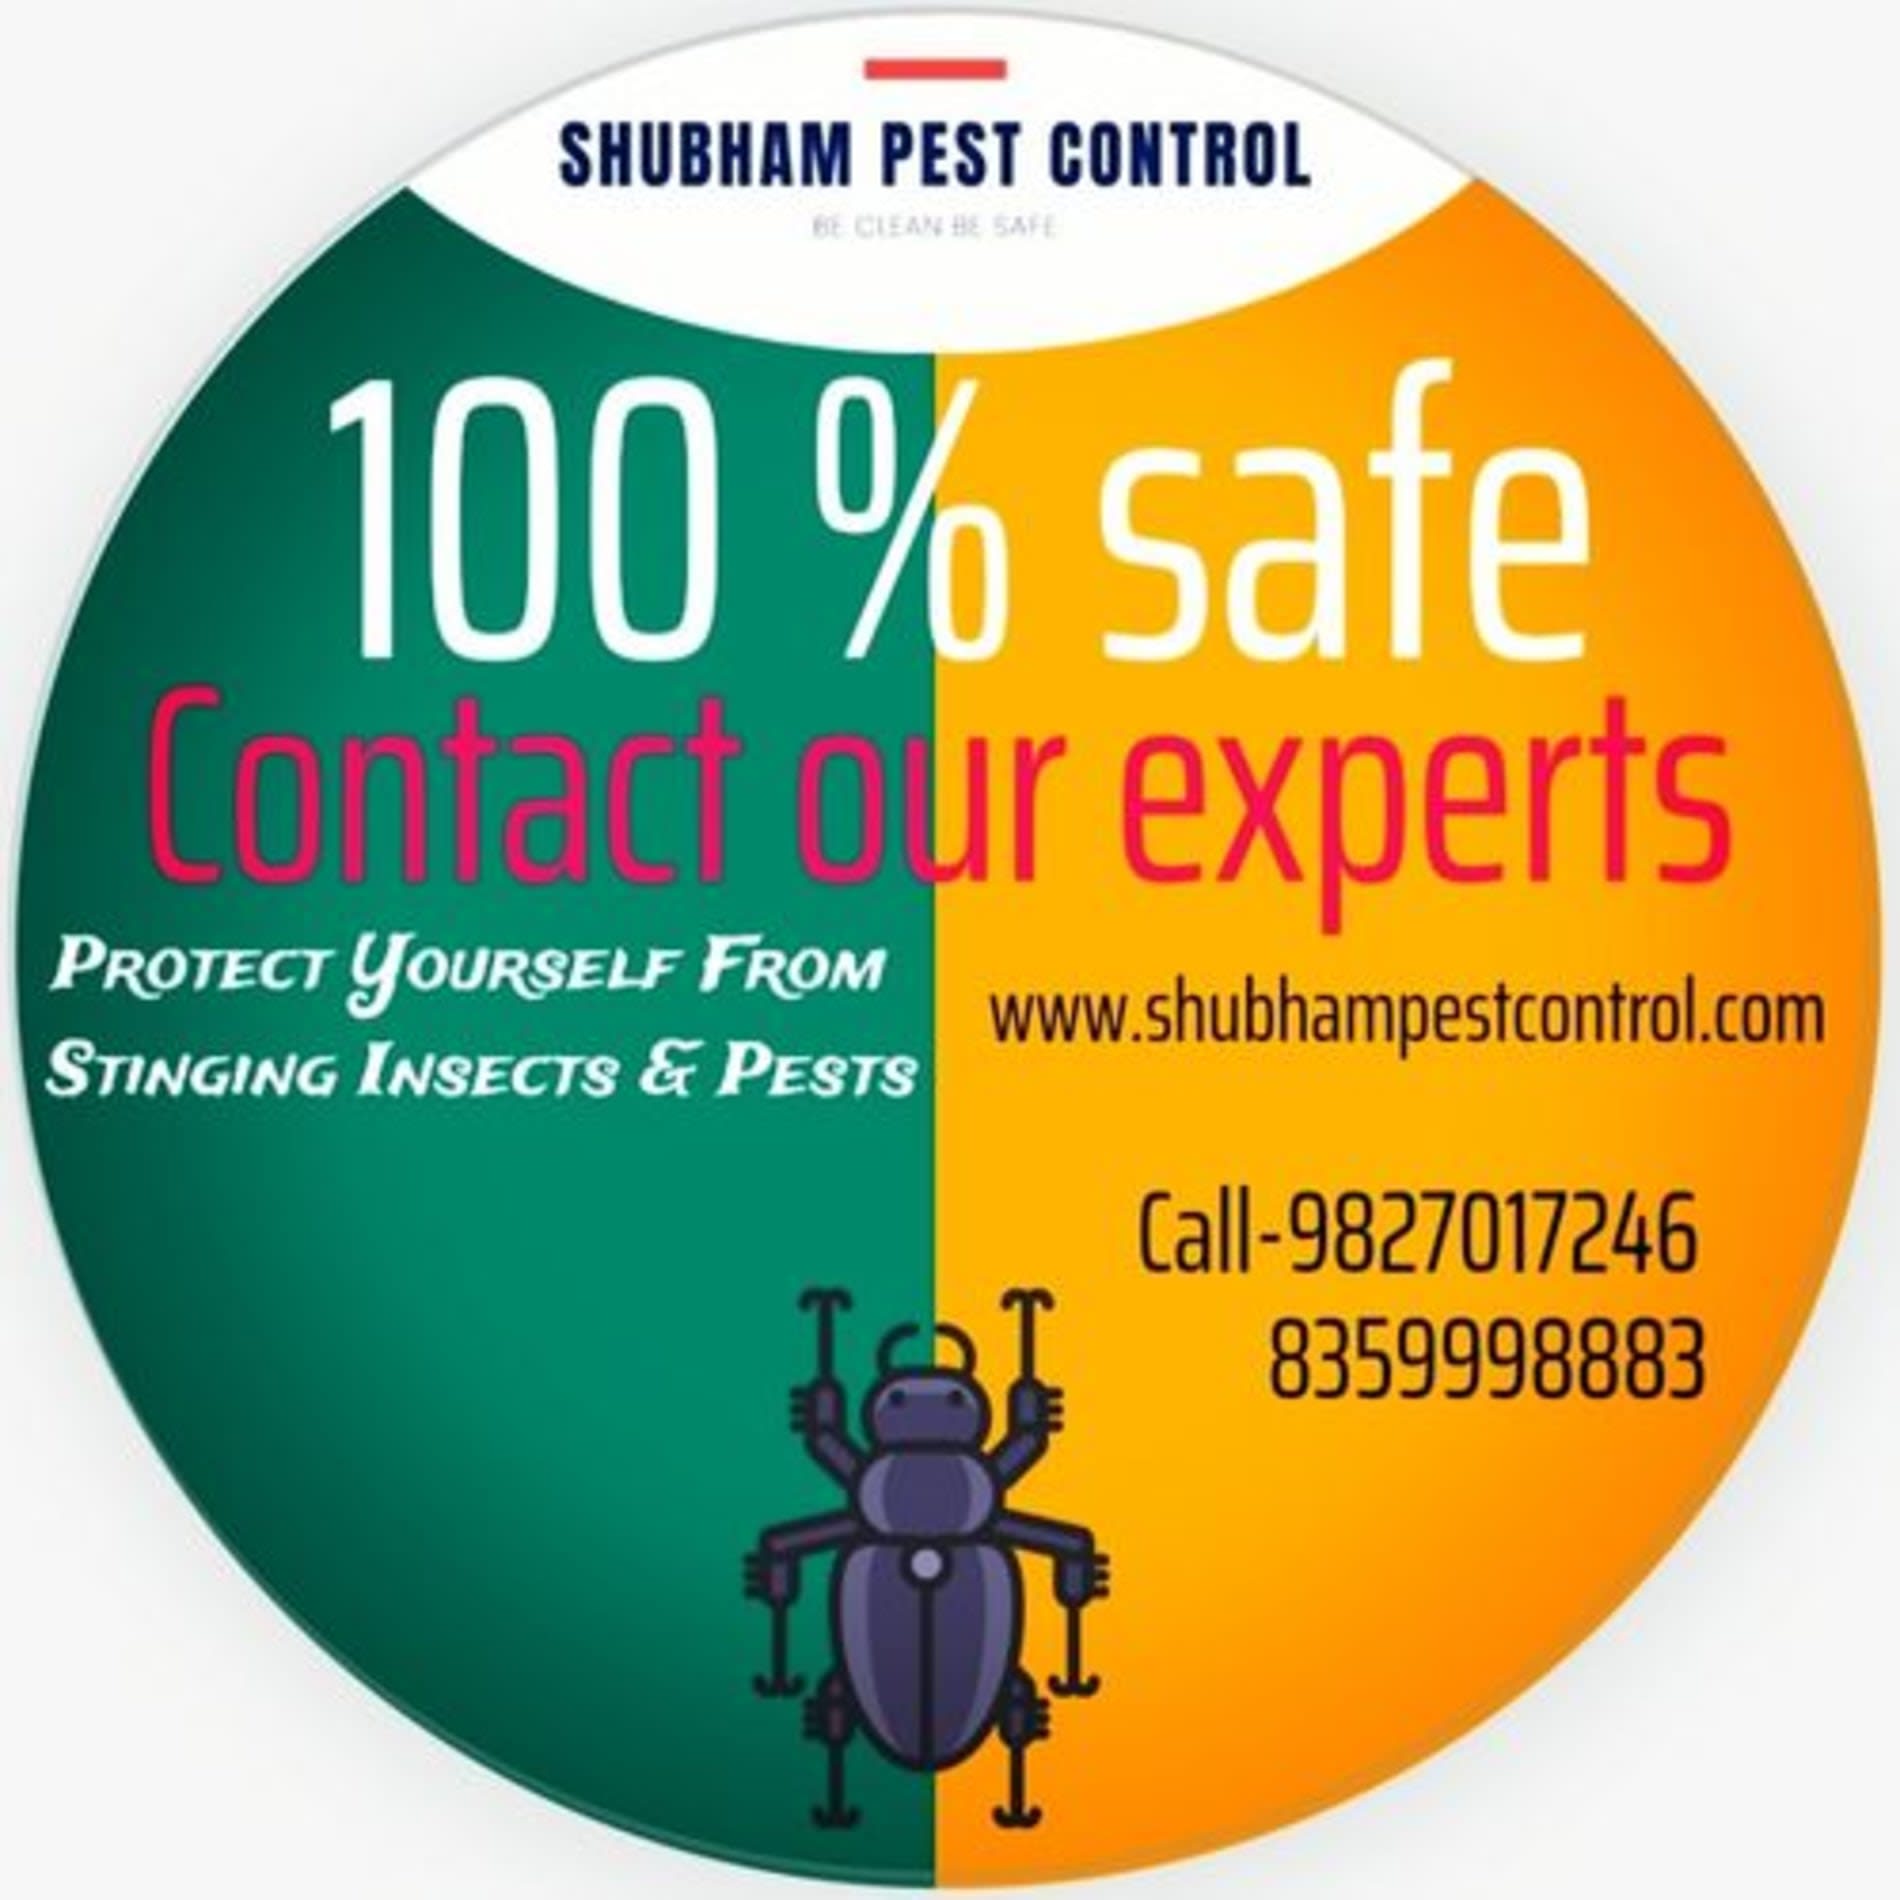 Shubham Pest Control